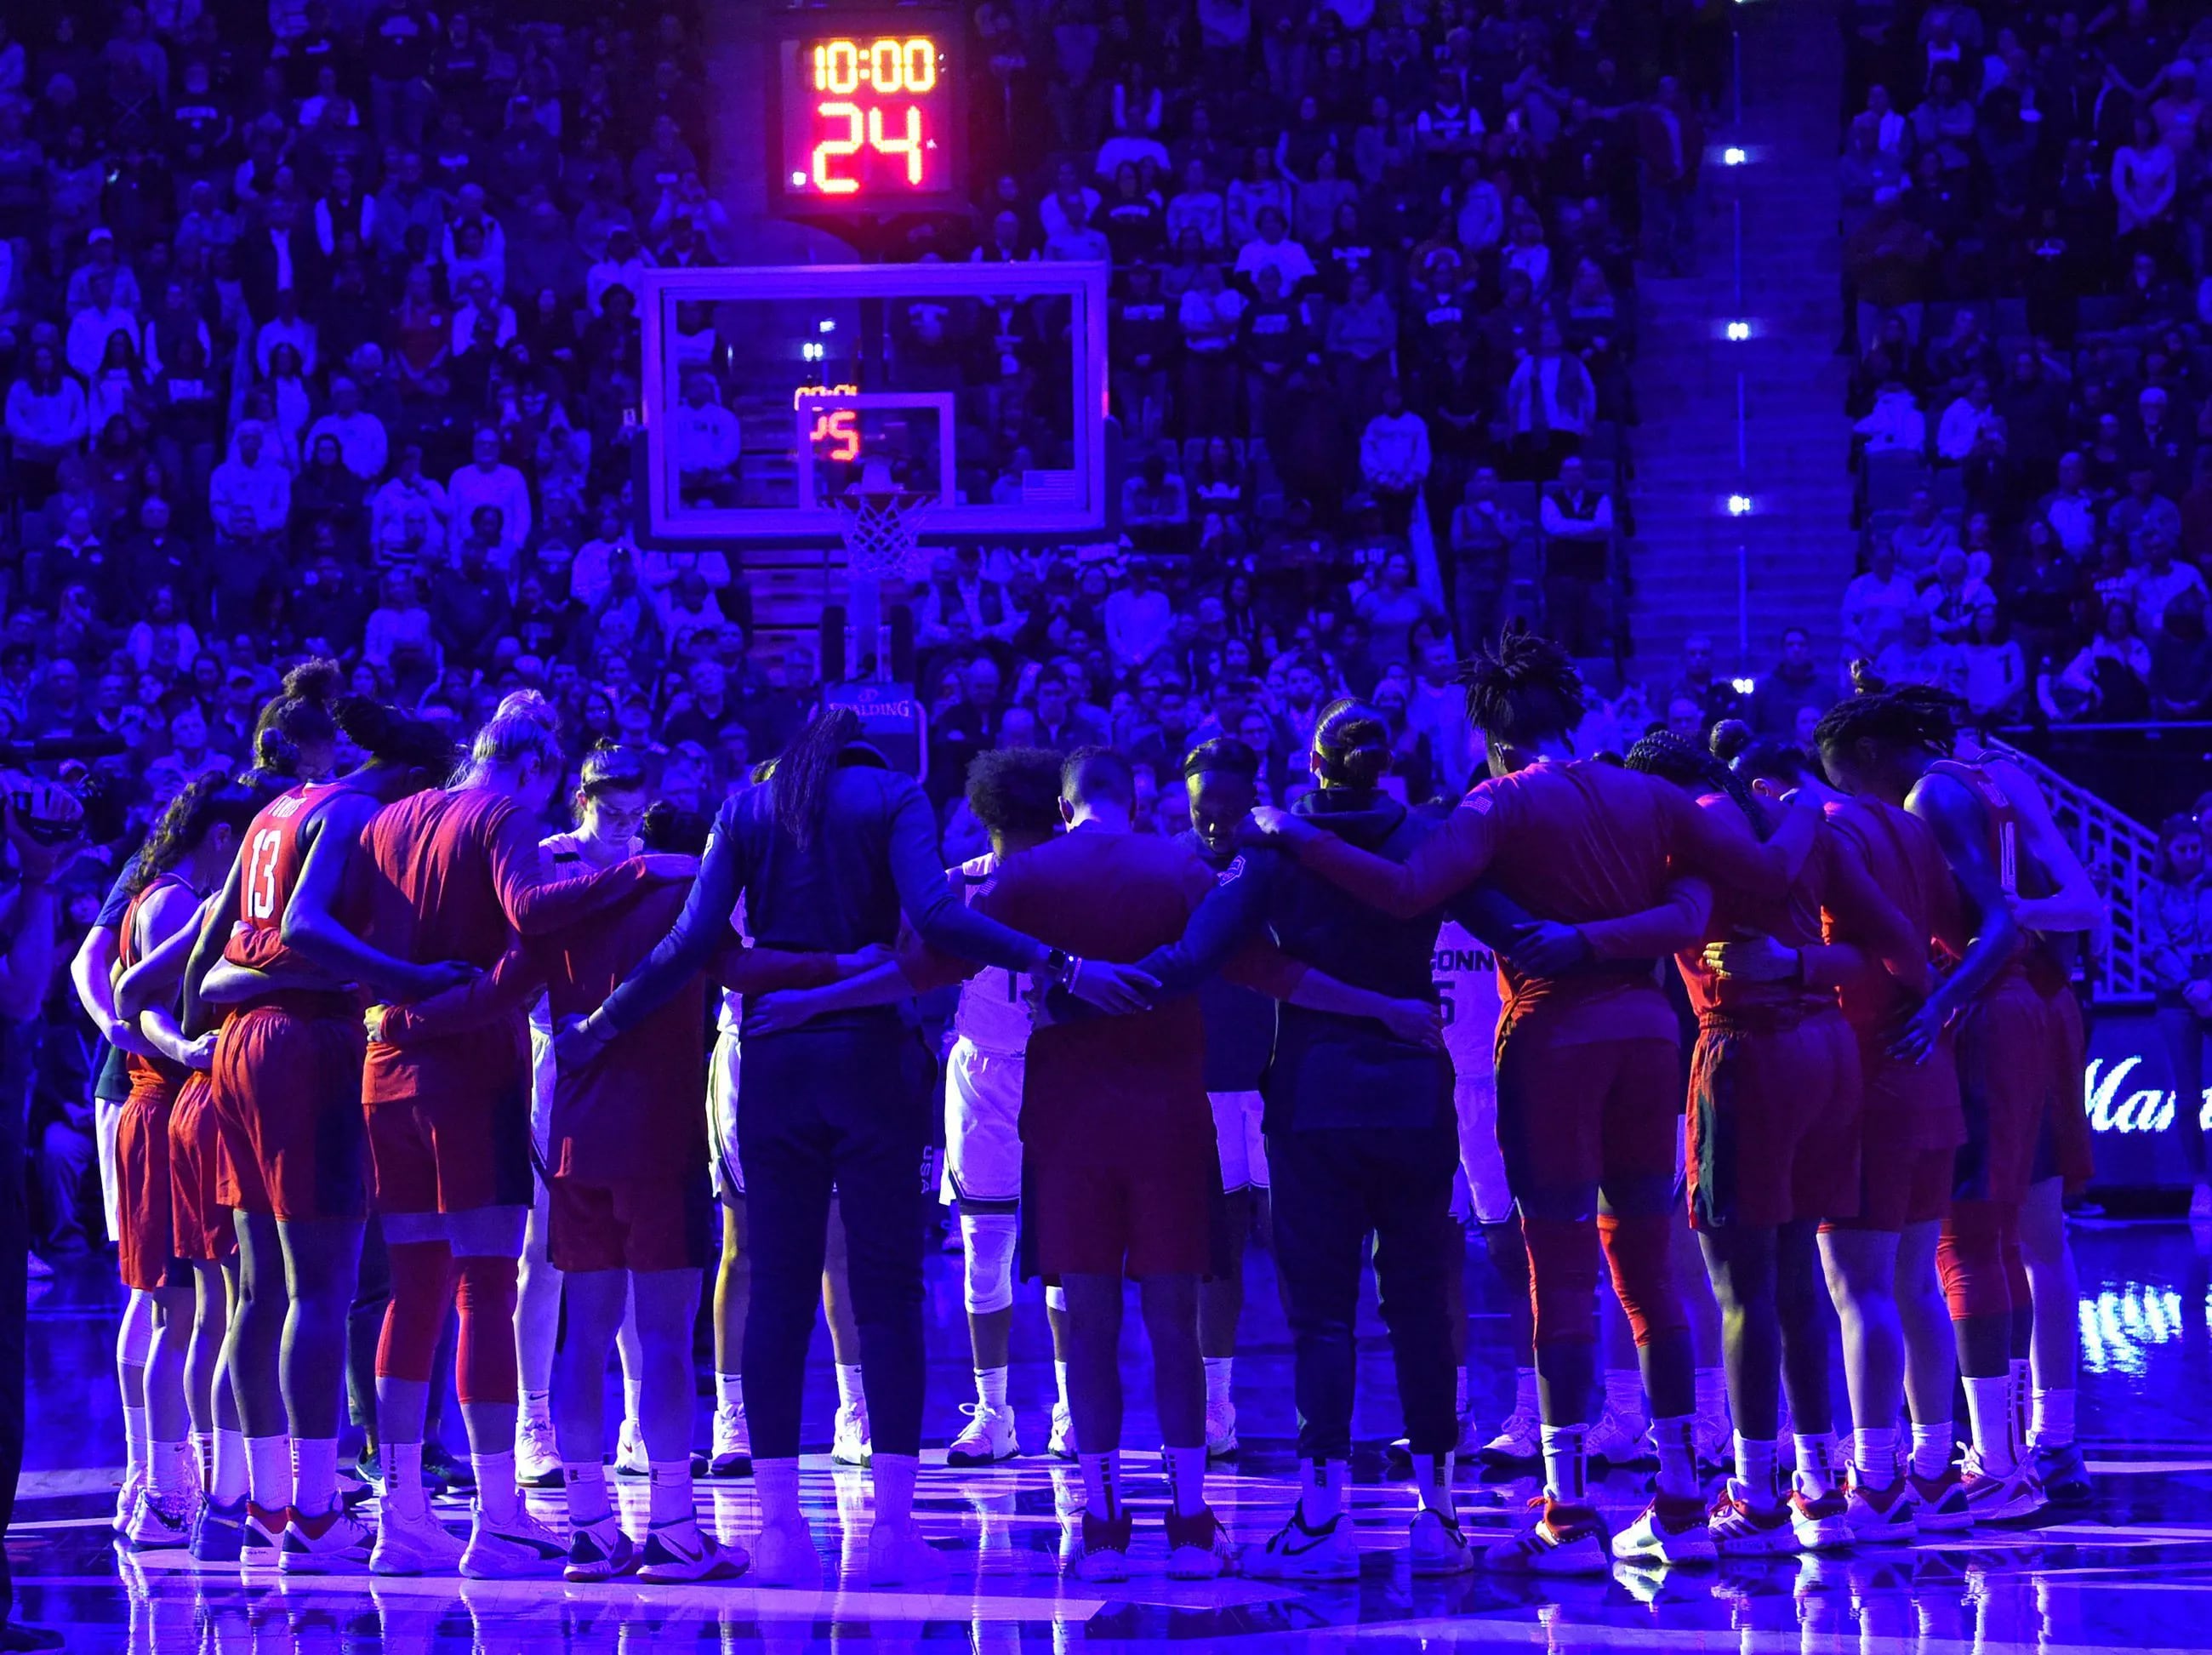 Women's basketball: A big night becomes a night honoring Kobe and